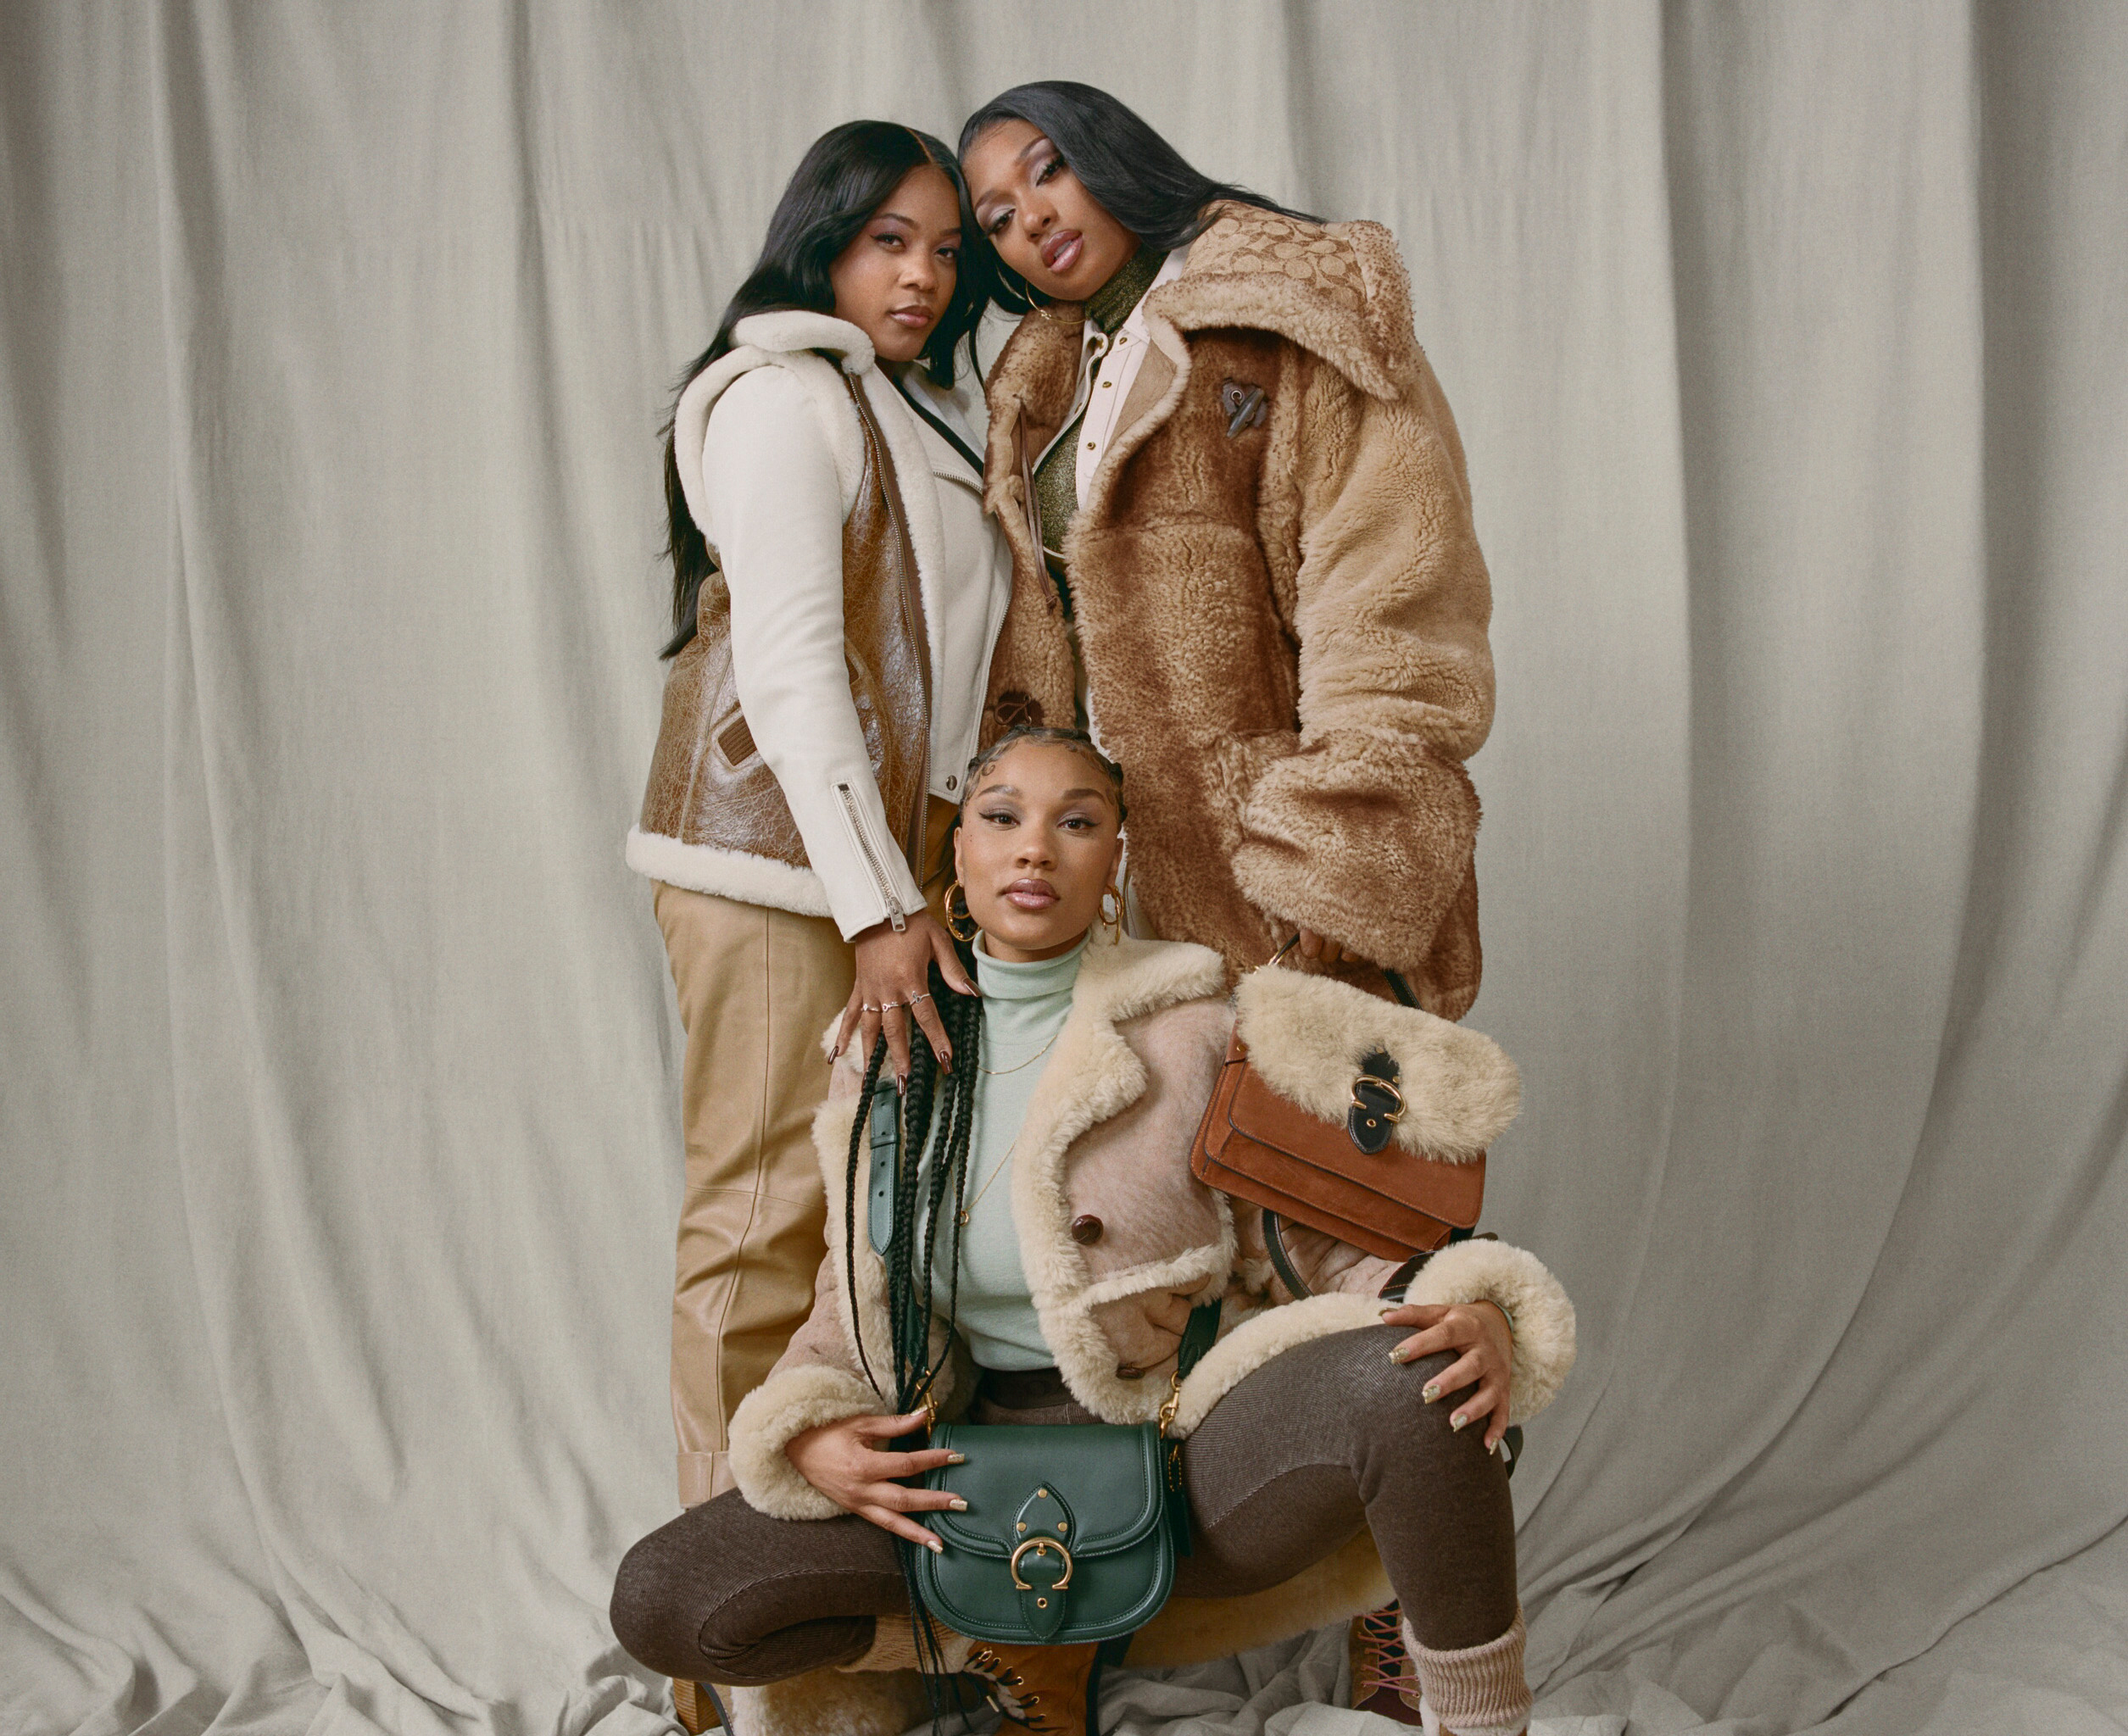 Leather & Louis Vuitton Love - Meagan's Moda